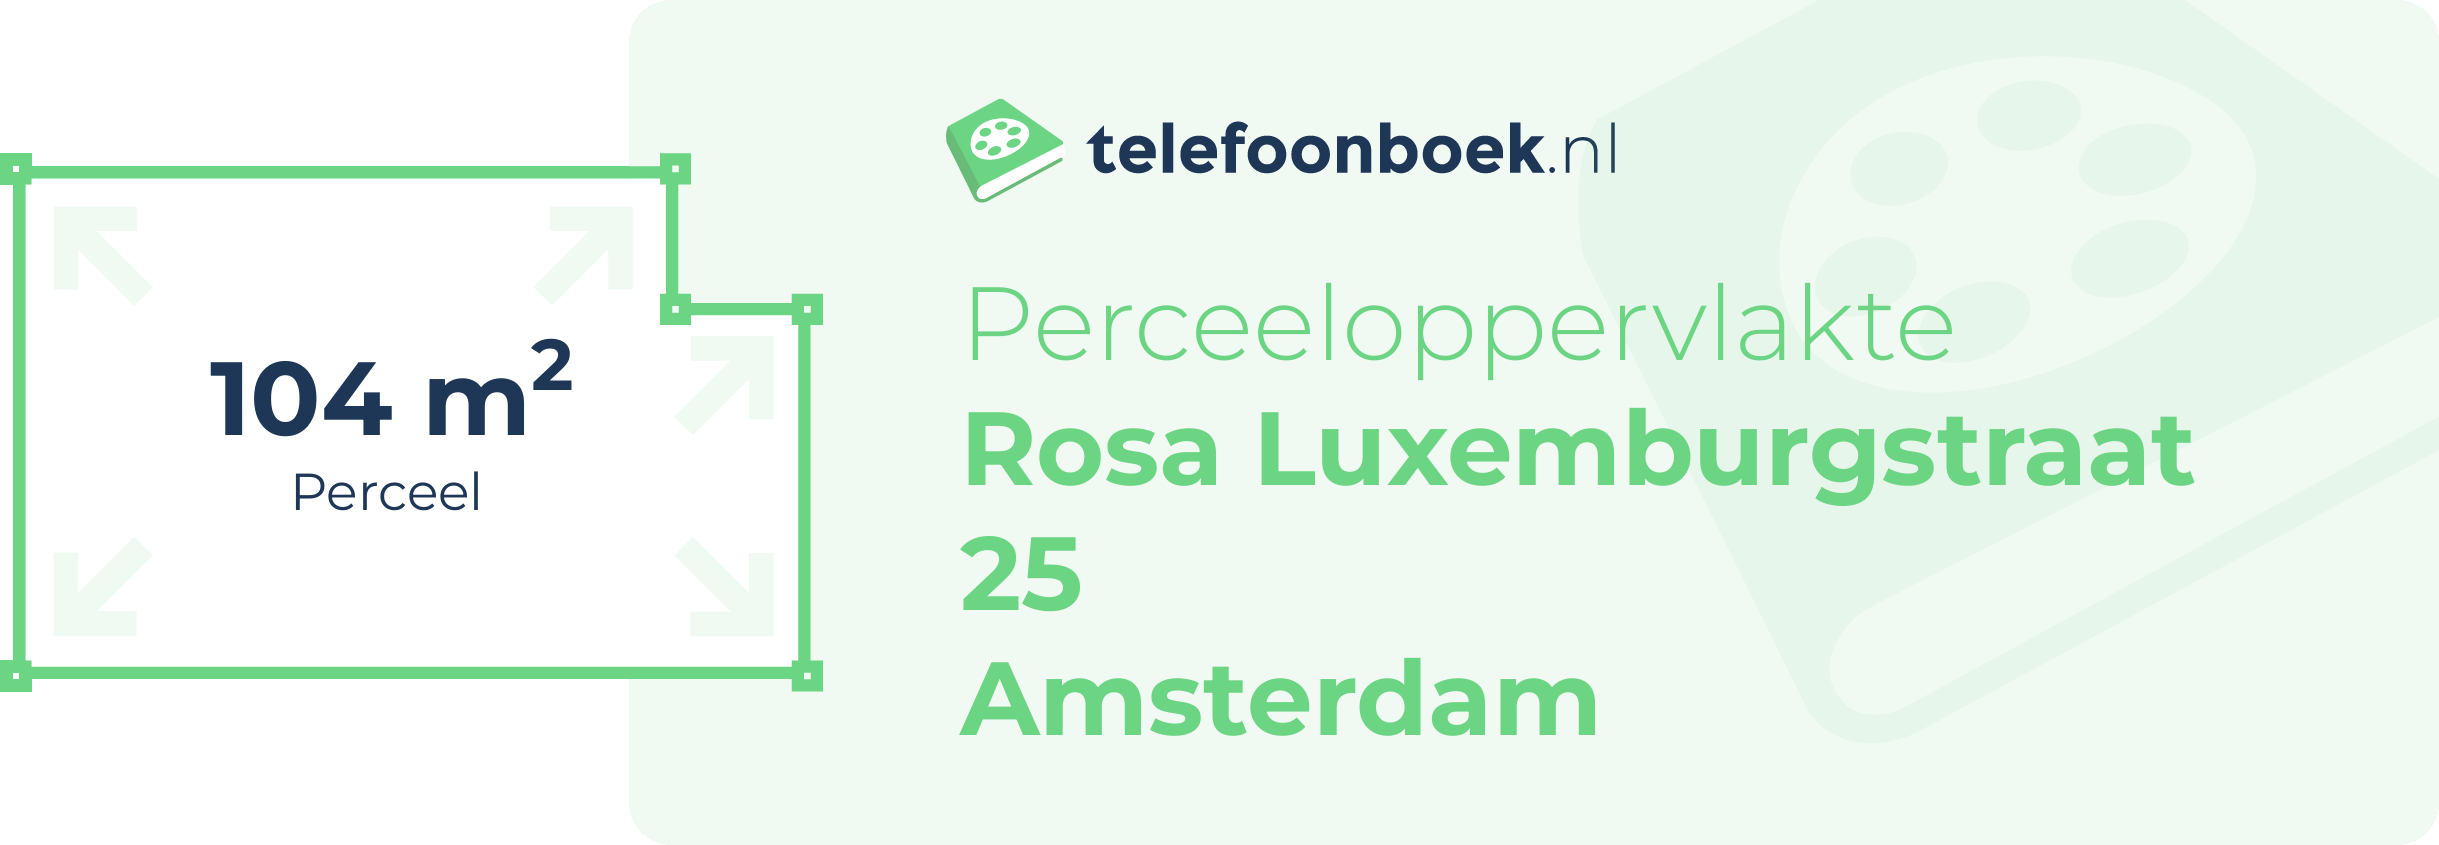 Perceeloppervlakte Rosa Luxemburgstraat 25 Amsterdam